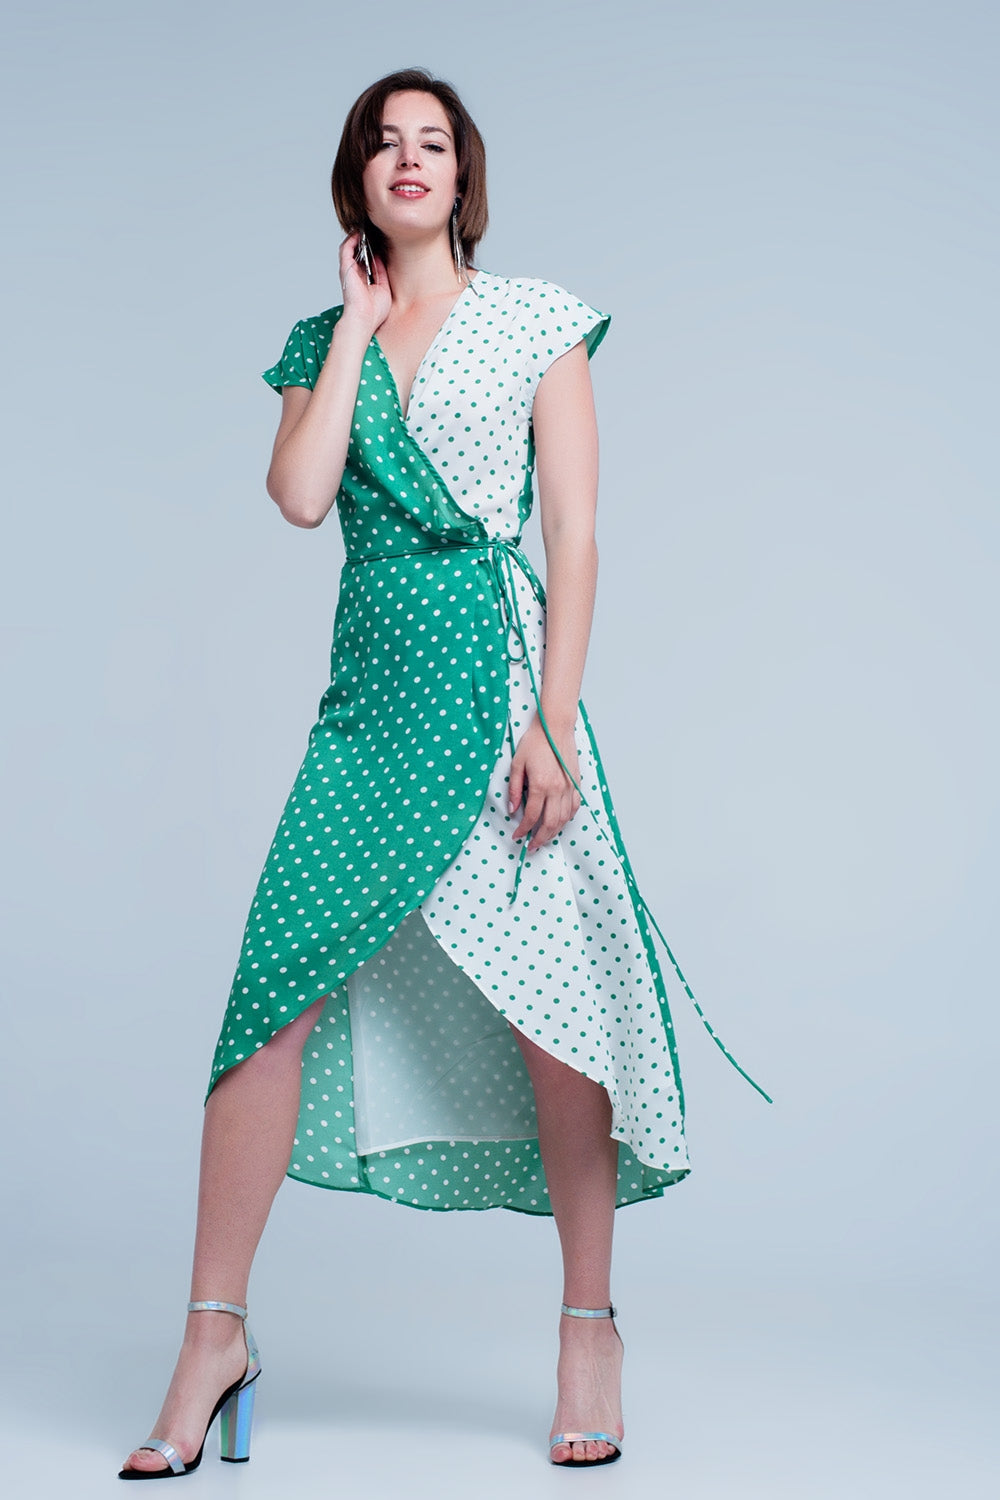 Green dress with polka dots - Szua Store